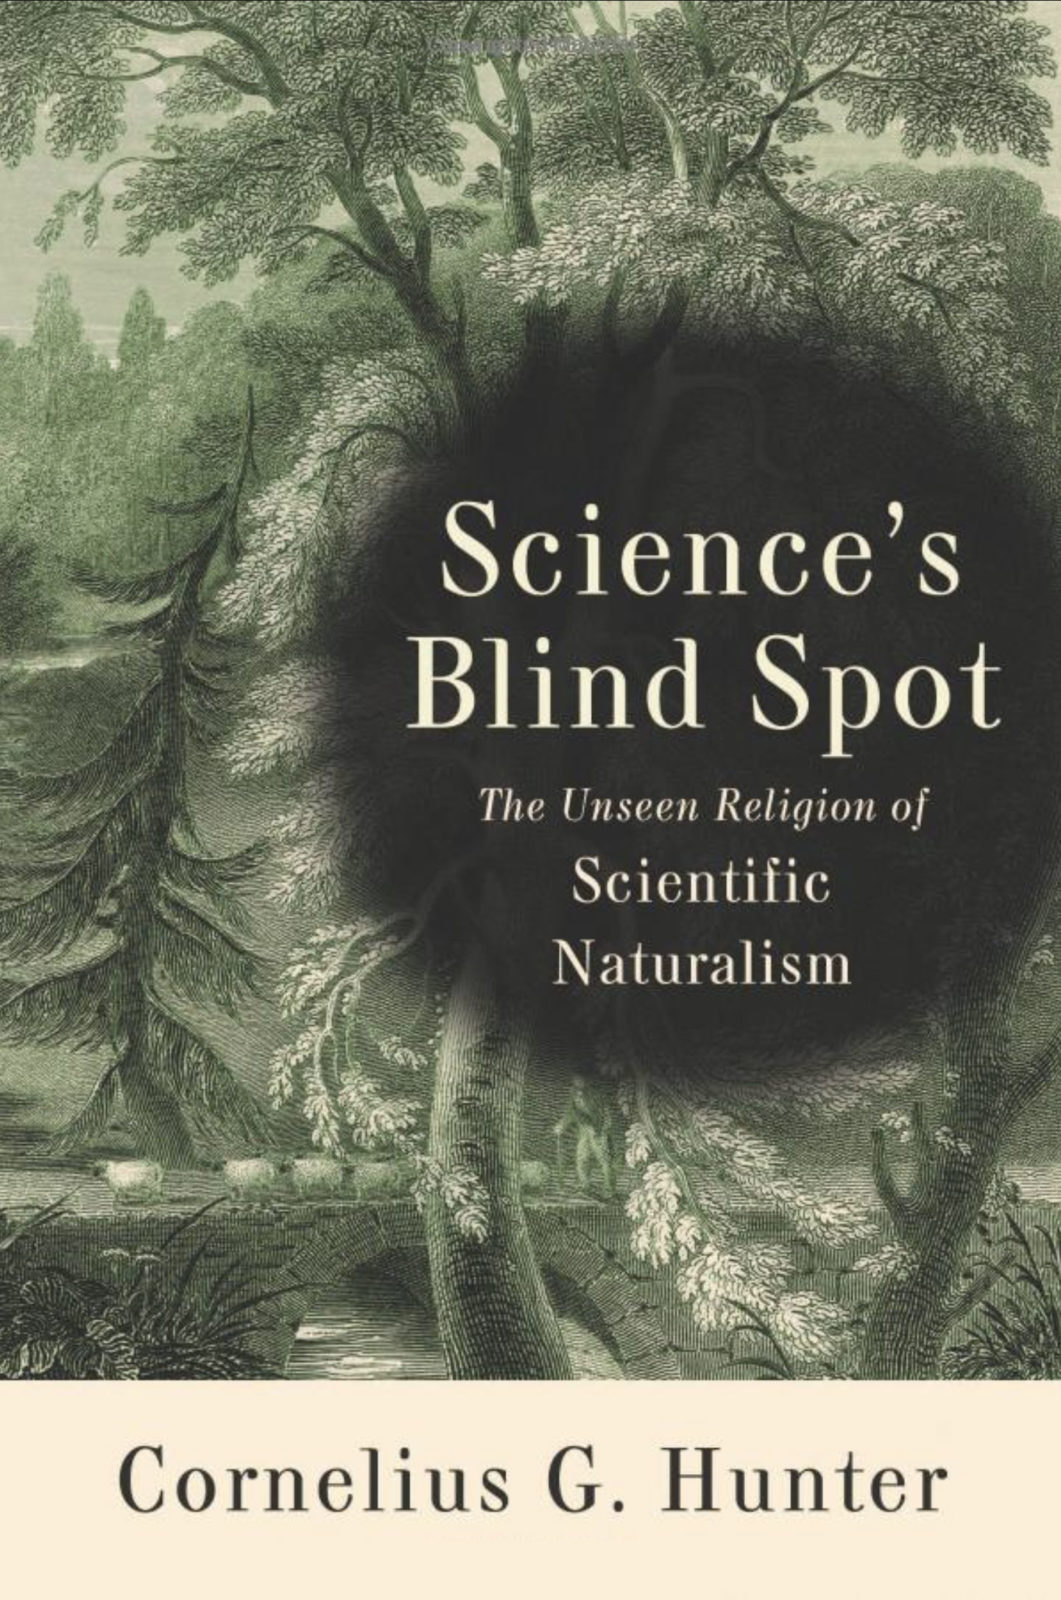 Science's Blind Spot by Cornelius G. Hunter